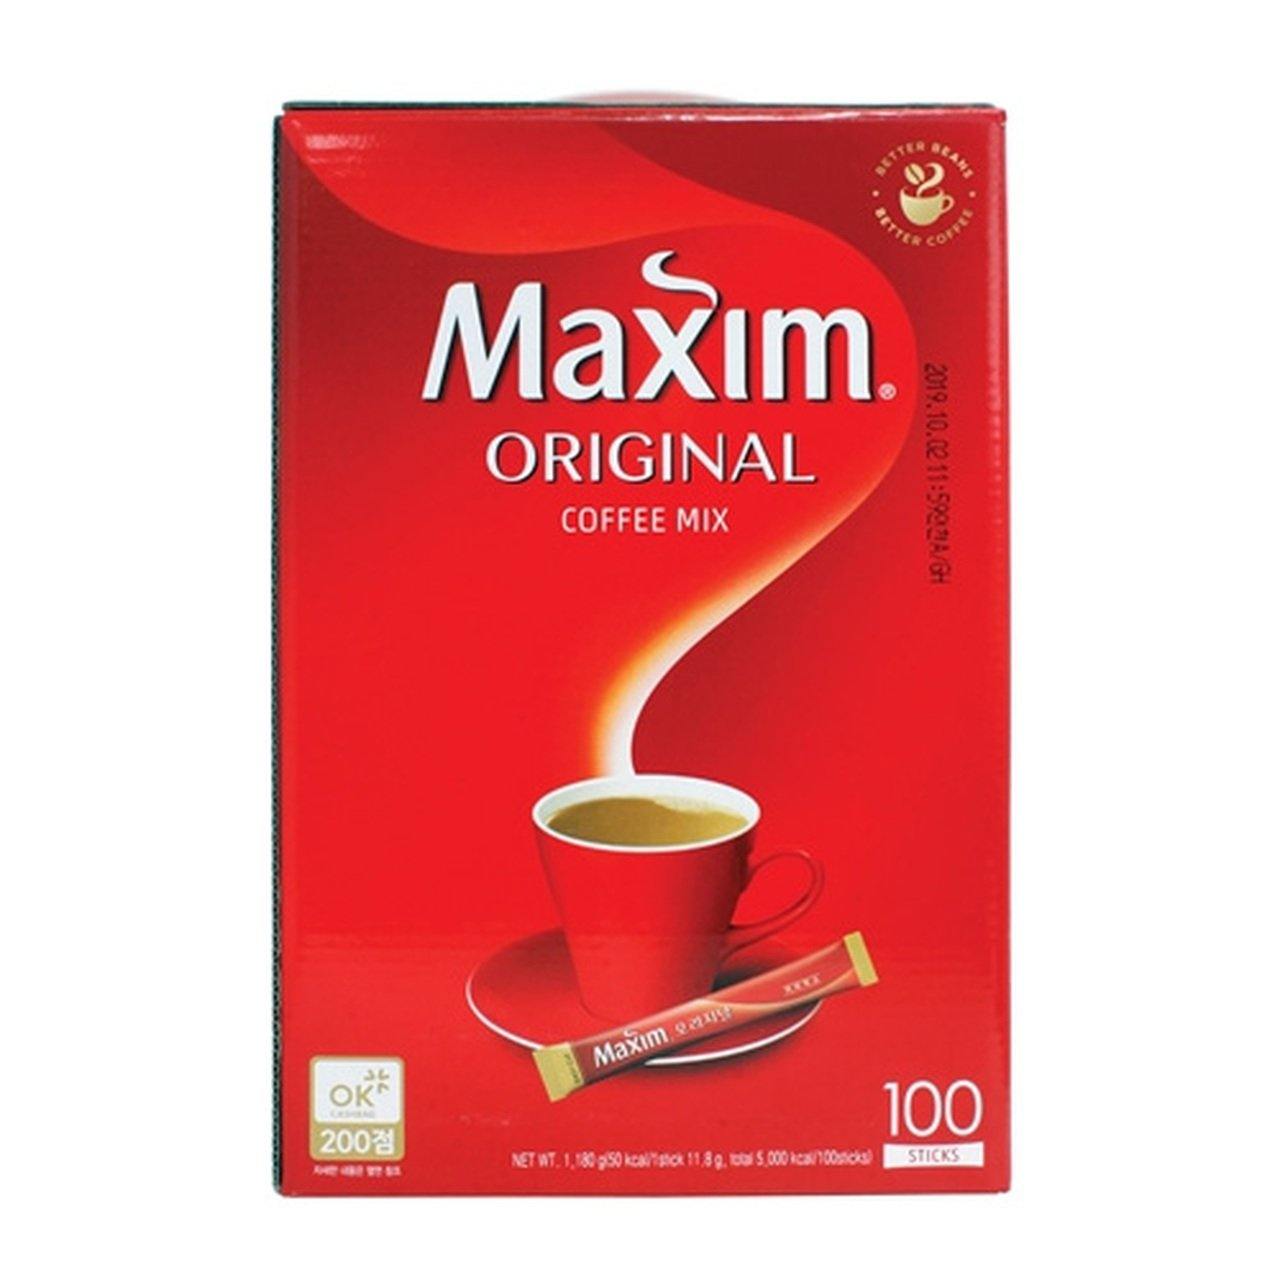 MAXIM ORIGINAL COFFEE MIX 100 STICKS - Premium Co  Groceries 